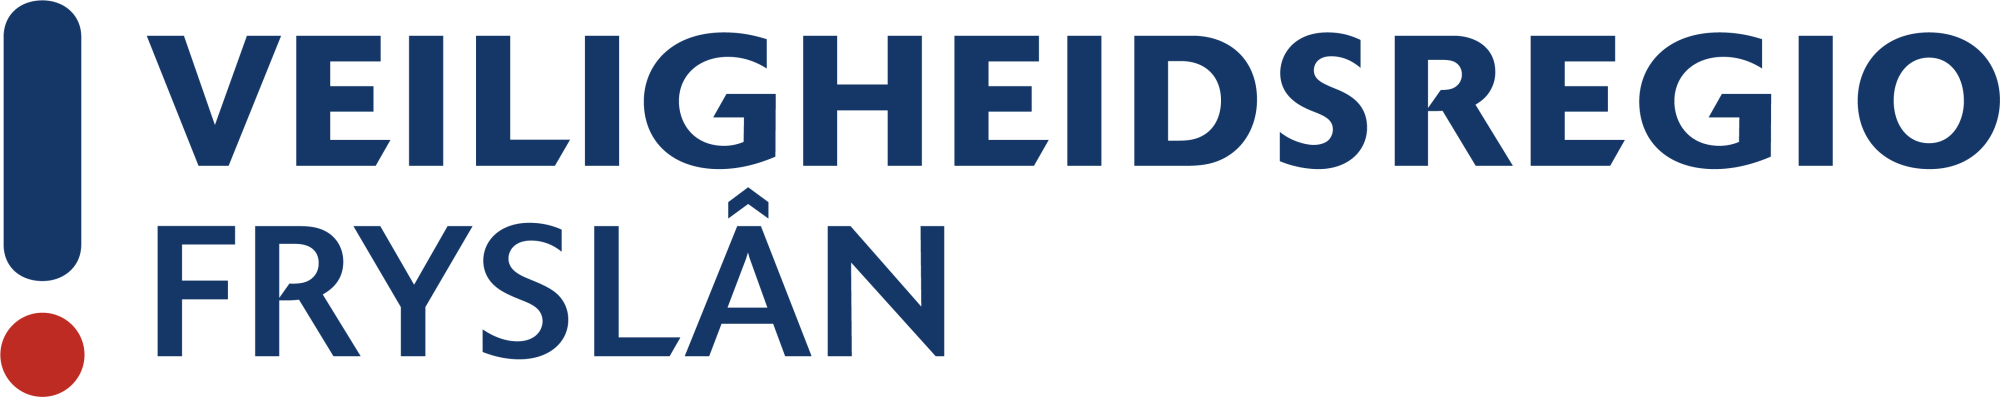 Veiligheidsregio Fryslân logo blauw rood transparante achtergrond